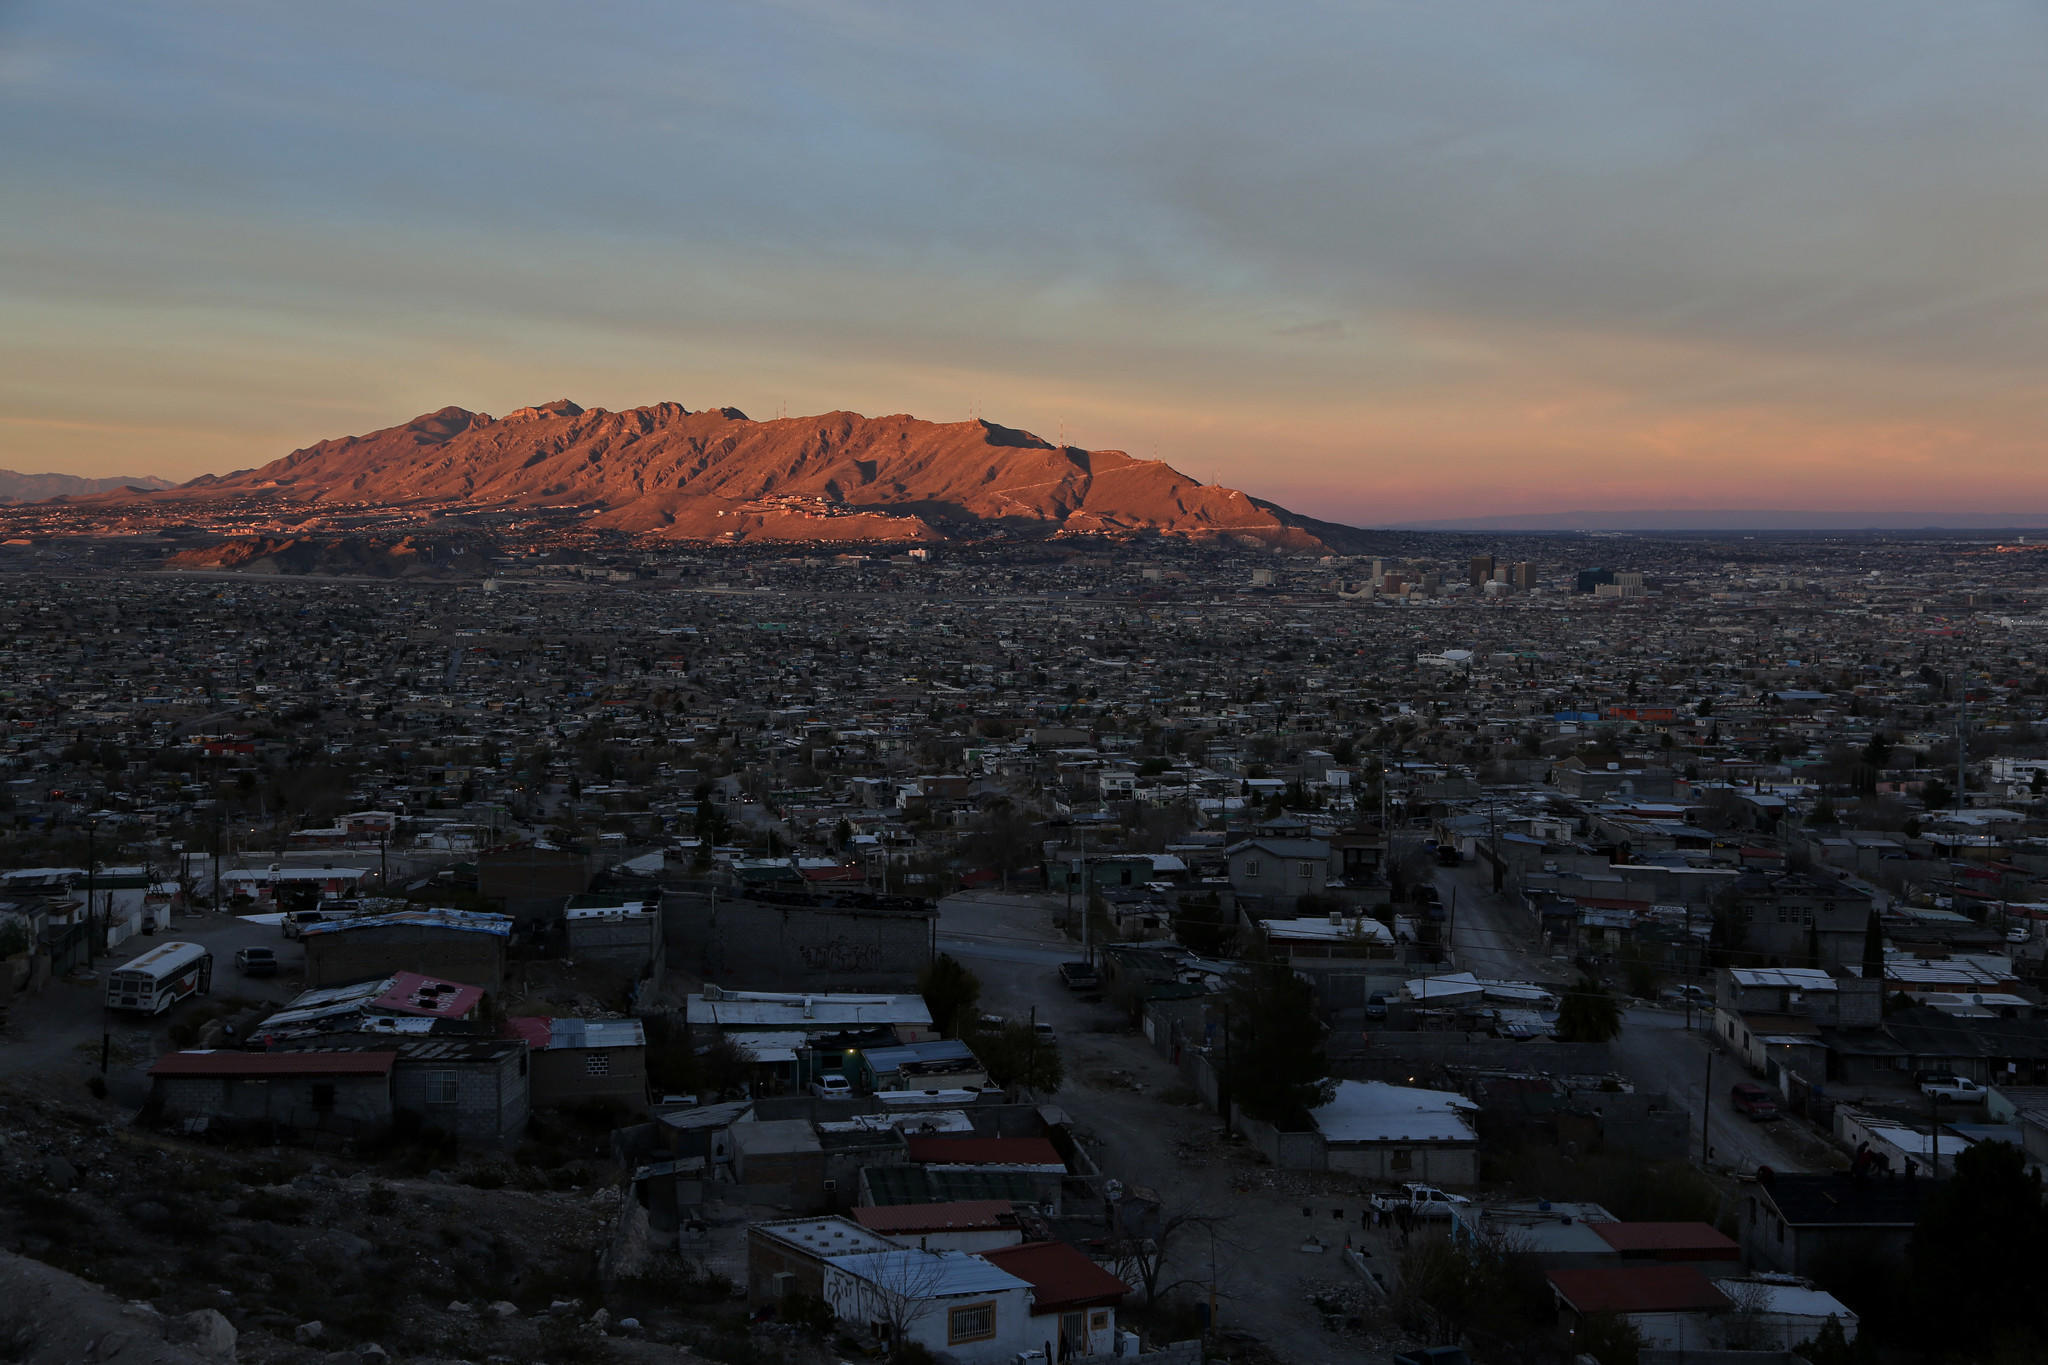 The sun sets over Juarez, Mexico, where many maquiladoras are located.